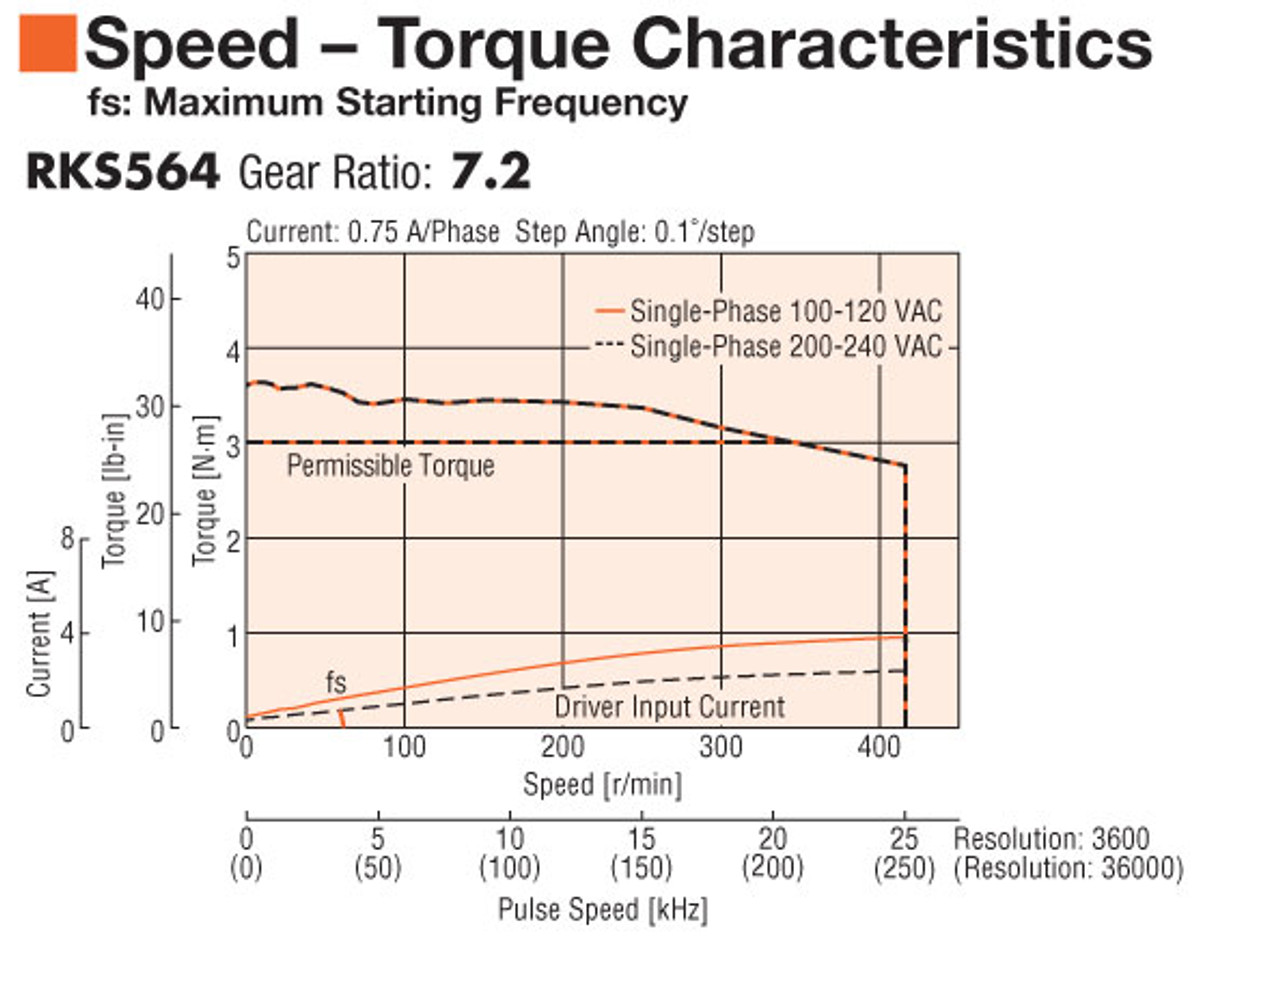 PKE564AC-TS7.2 - Speed-Torque